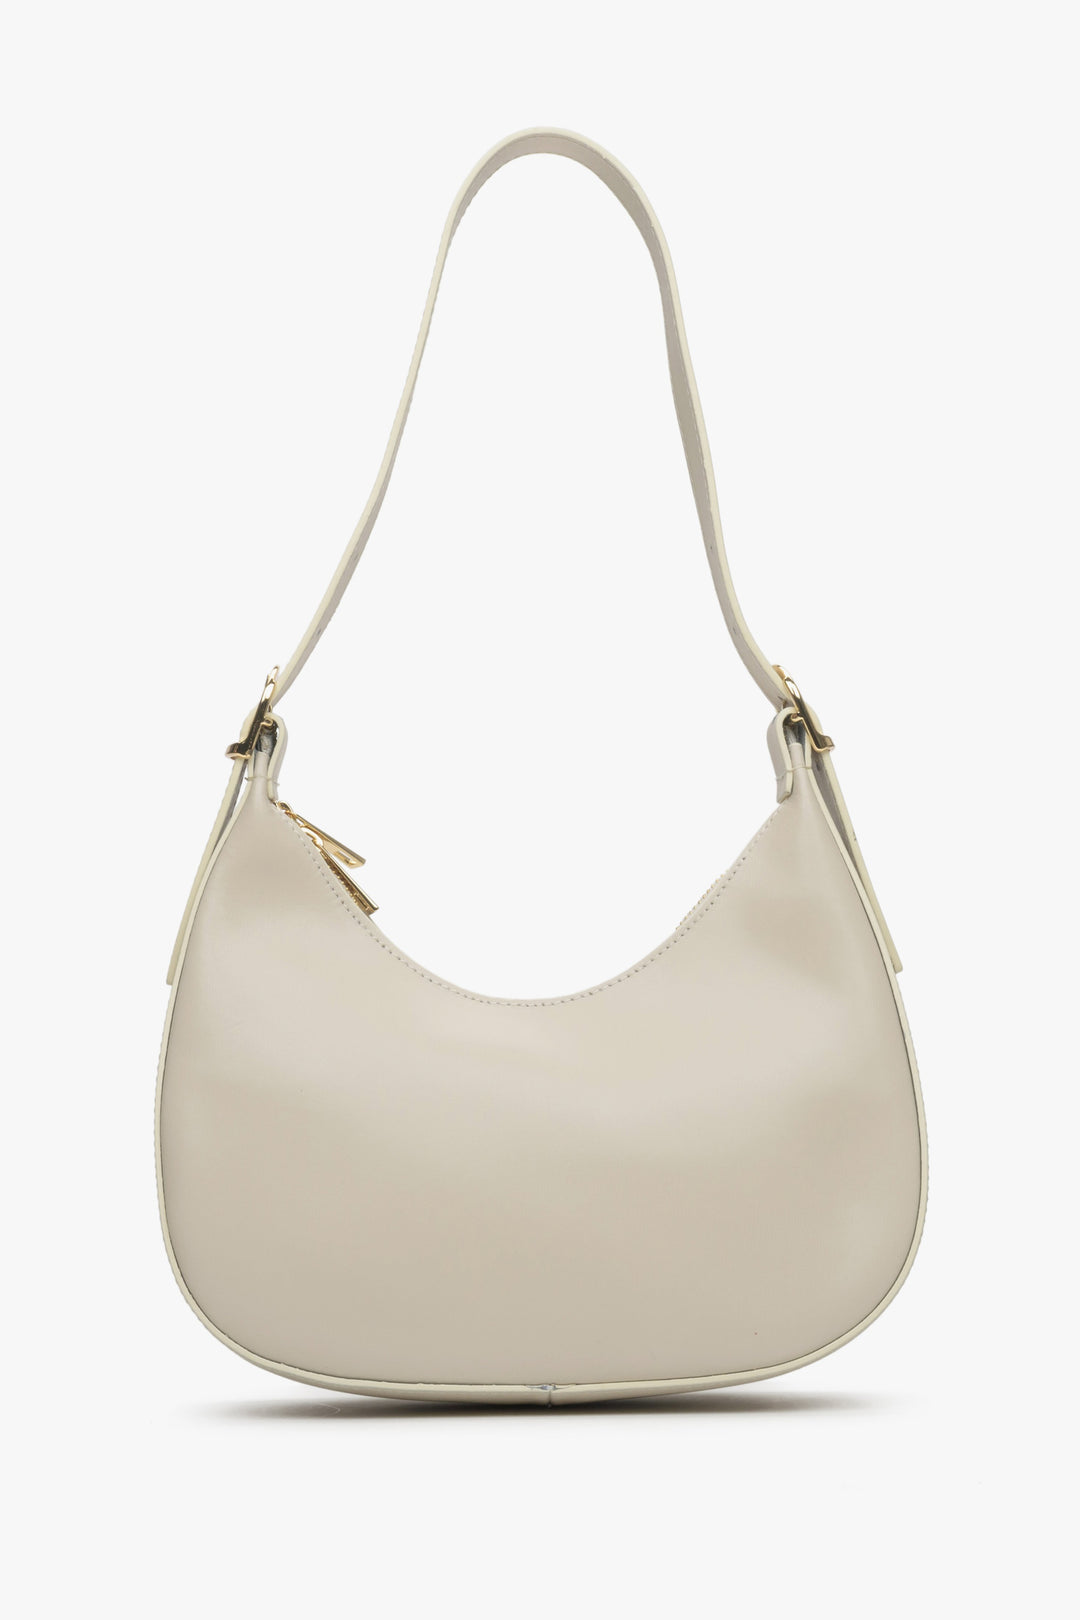 Women's beige Estro handbag made of Italian genuine leather.